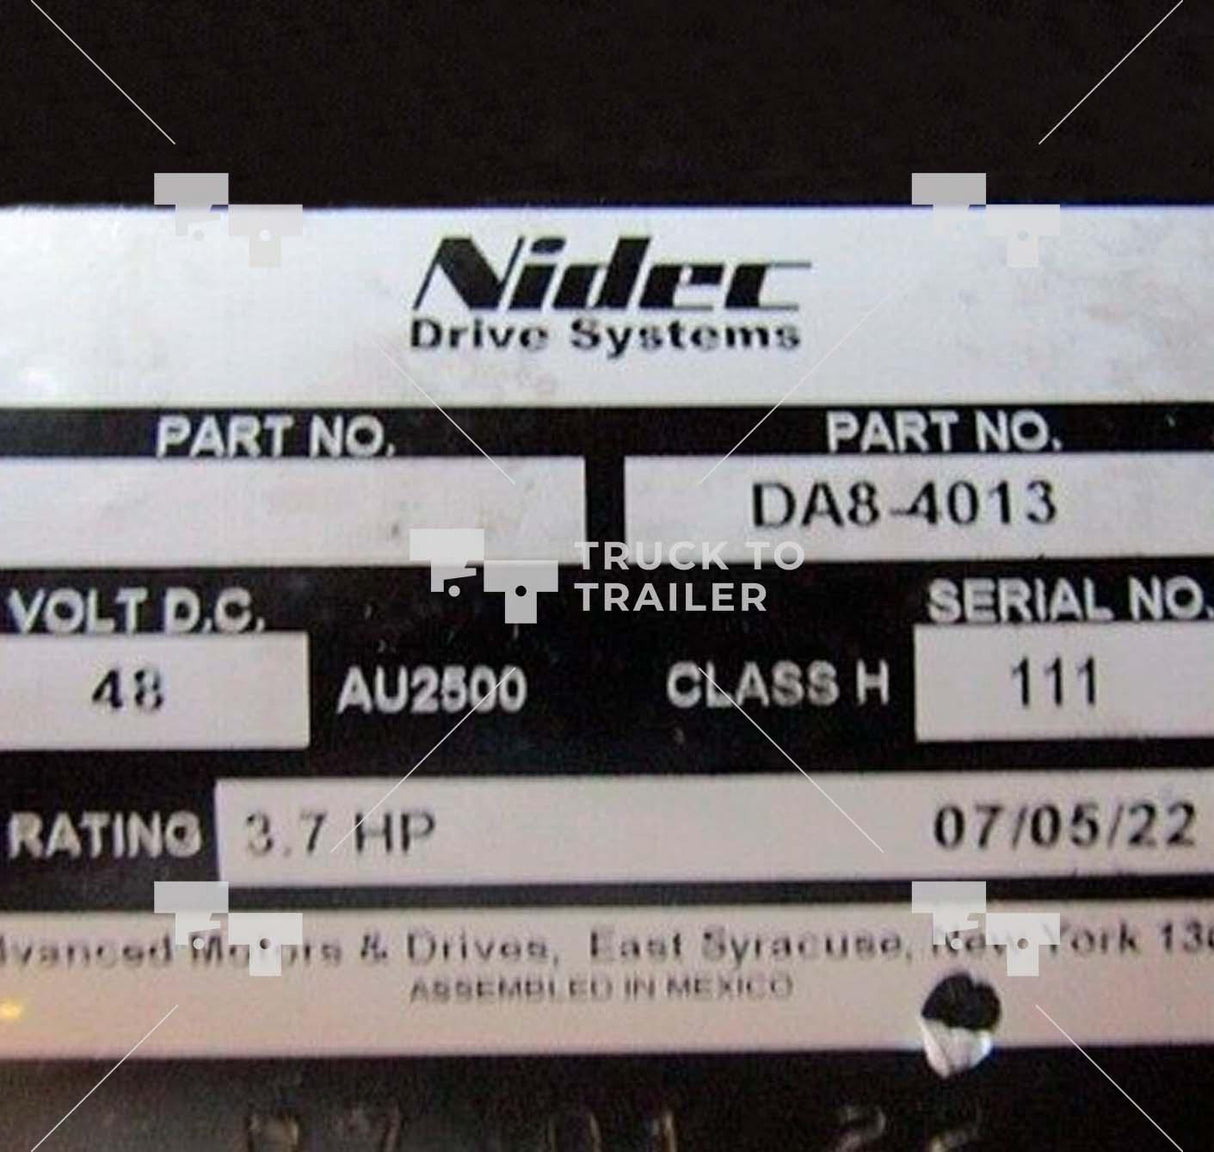 Da8-4013 Oem Nidec Drive Systems Electric Motor 48 Volt /3.7 Hp - Truck To Trailer